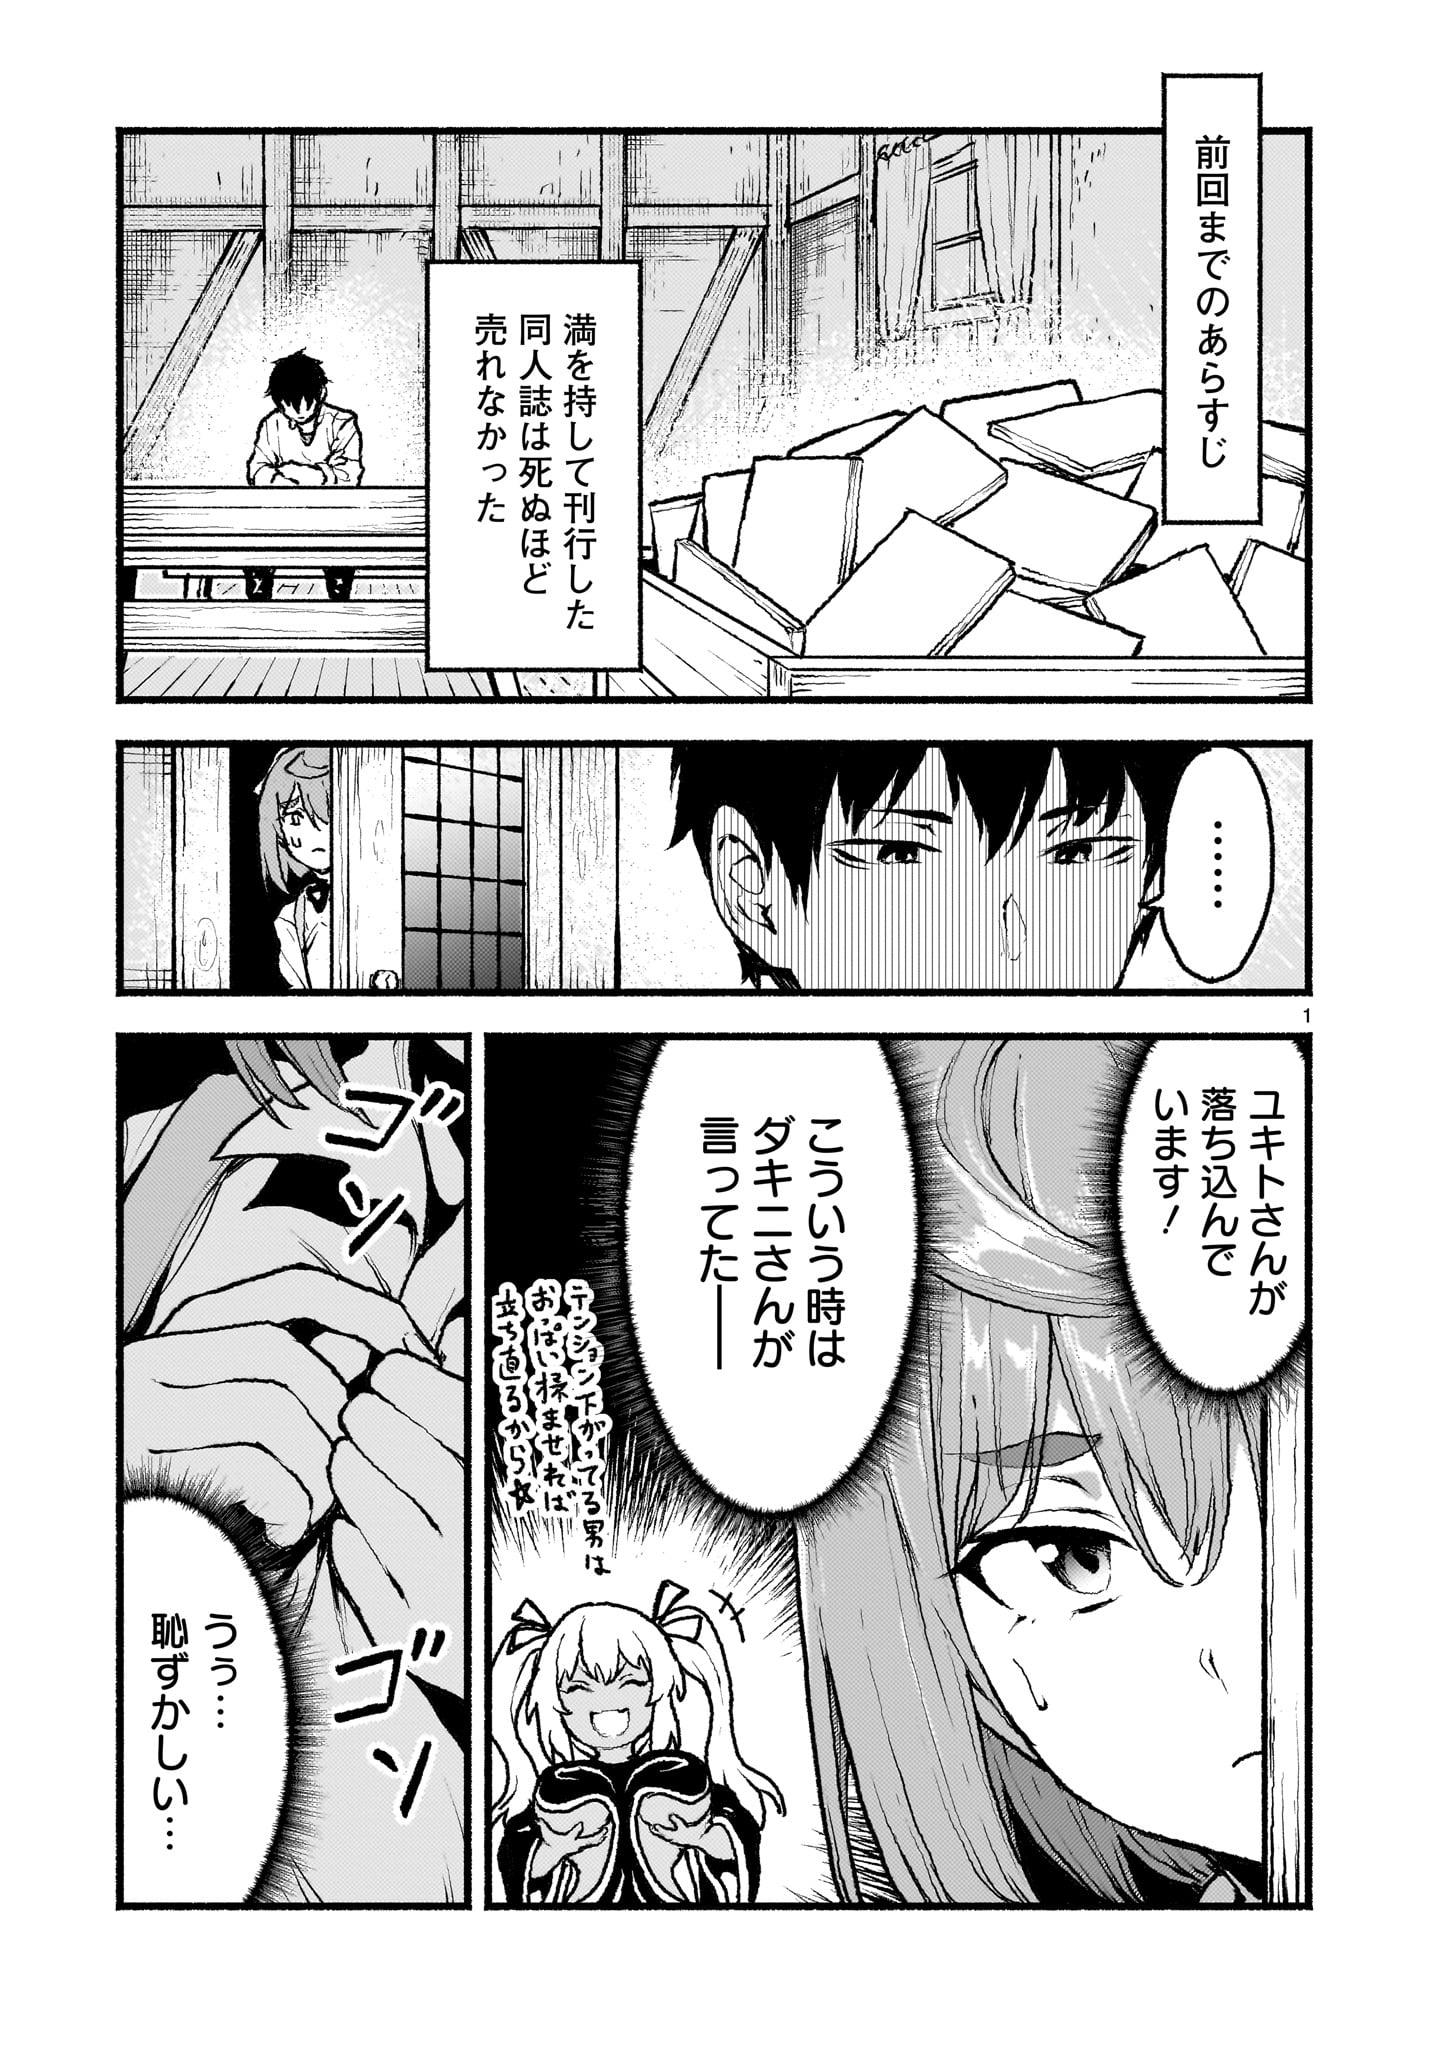 Kaminaki Sekai no Kamisama Katsudou - Chapter 48 - Page 1